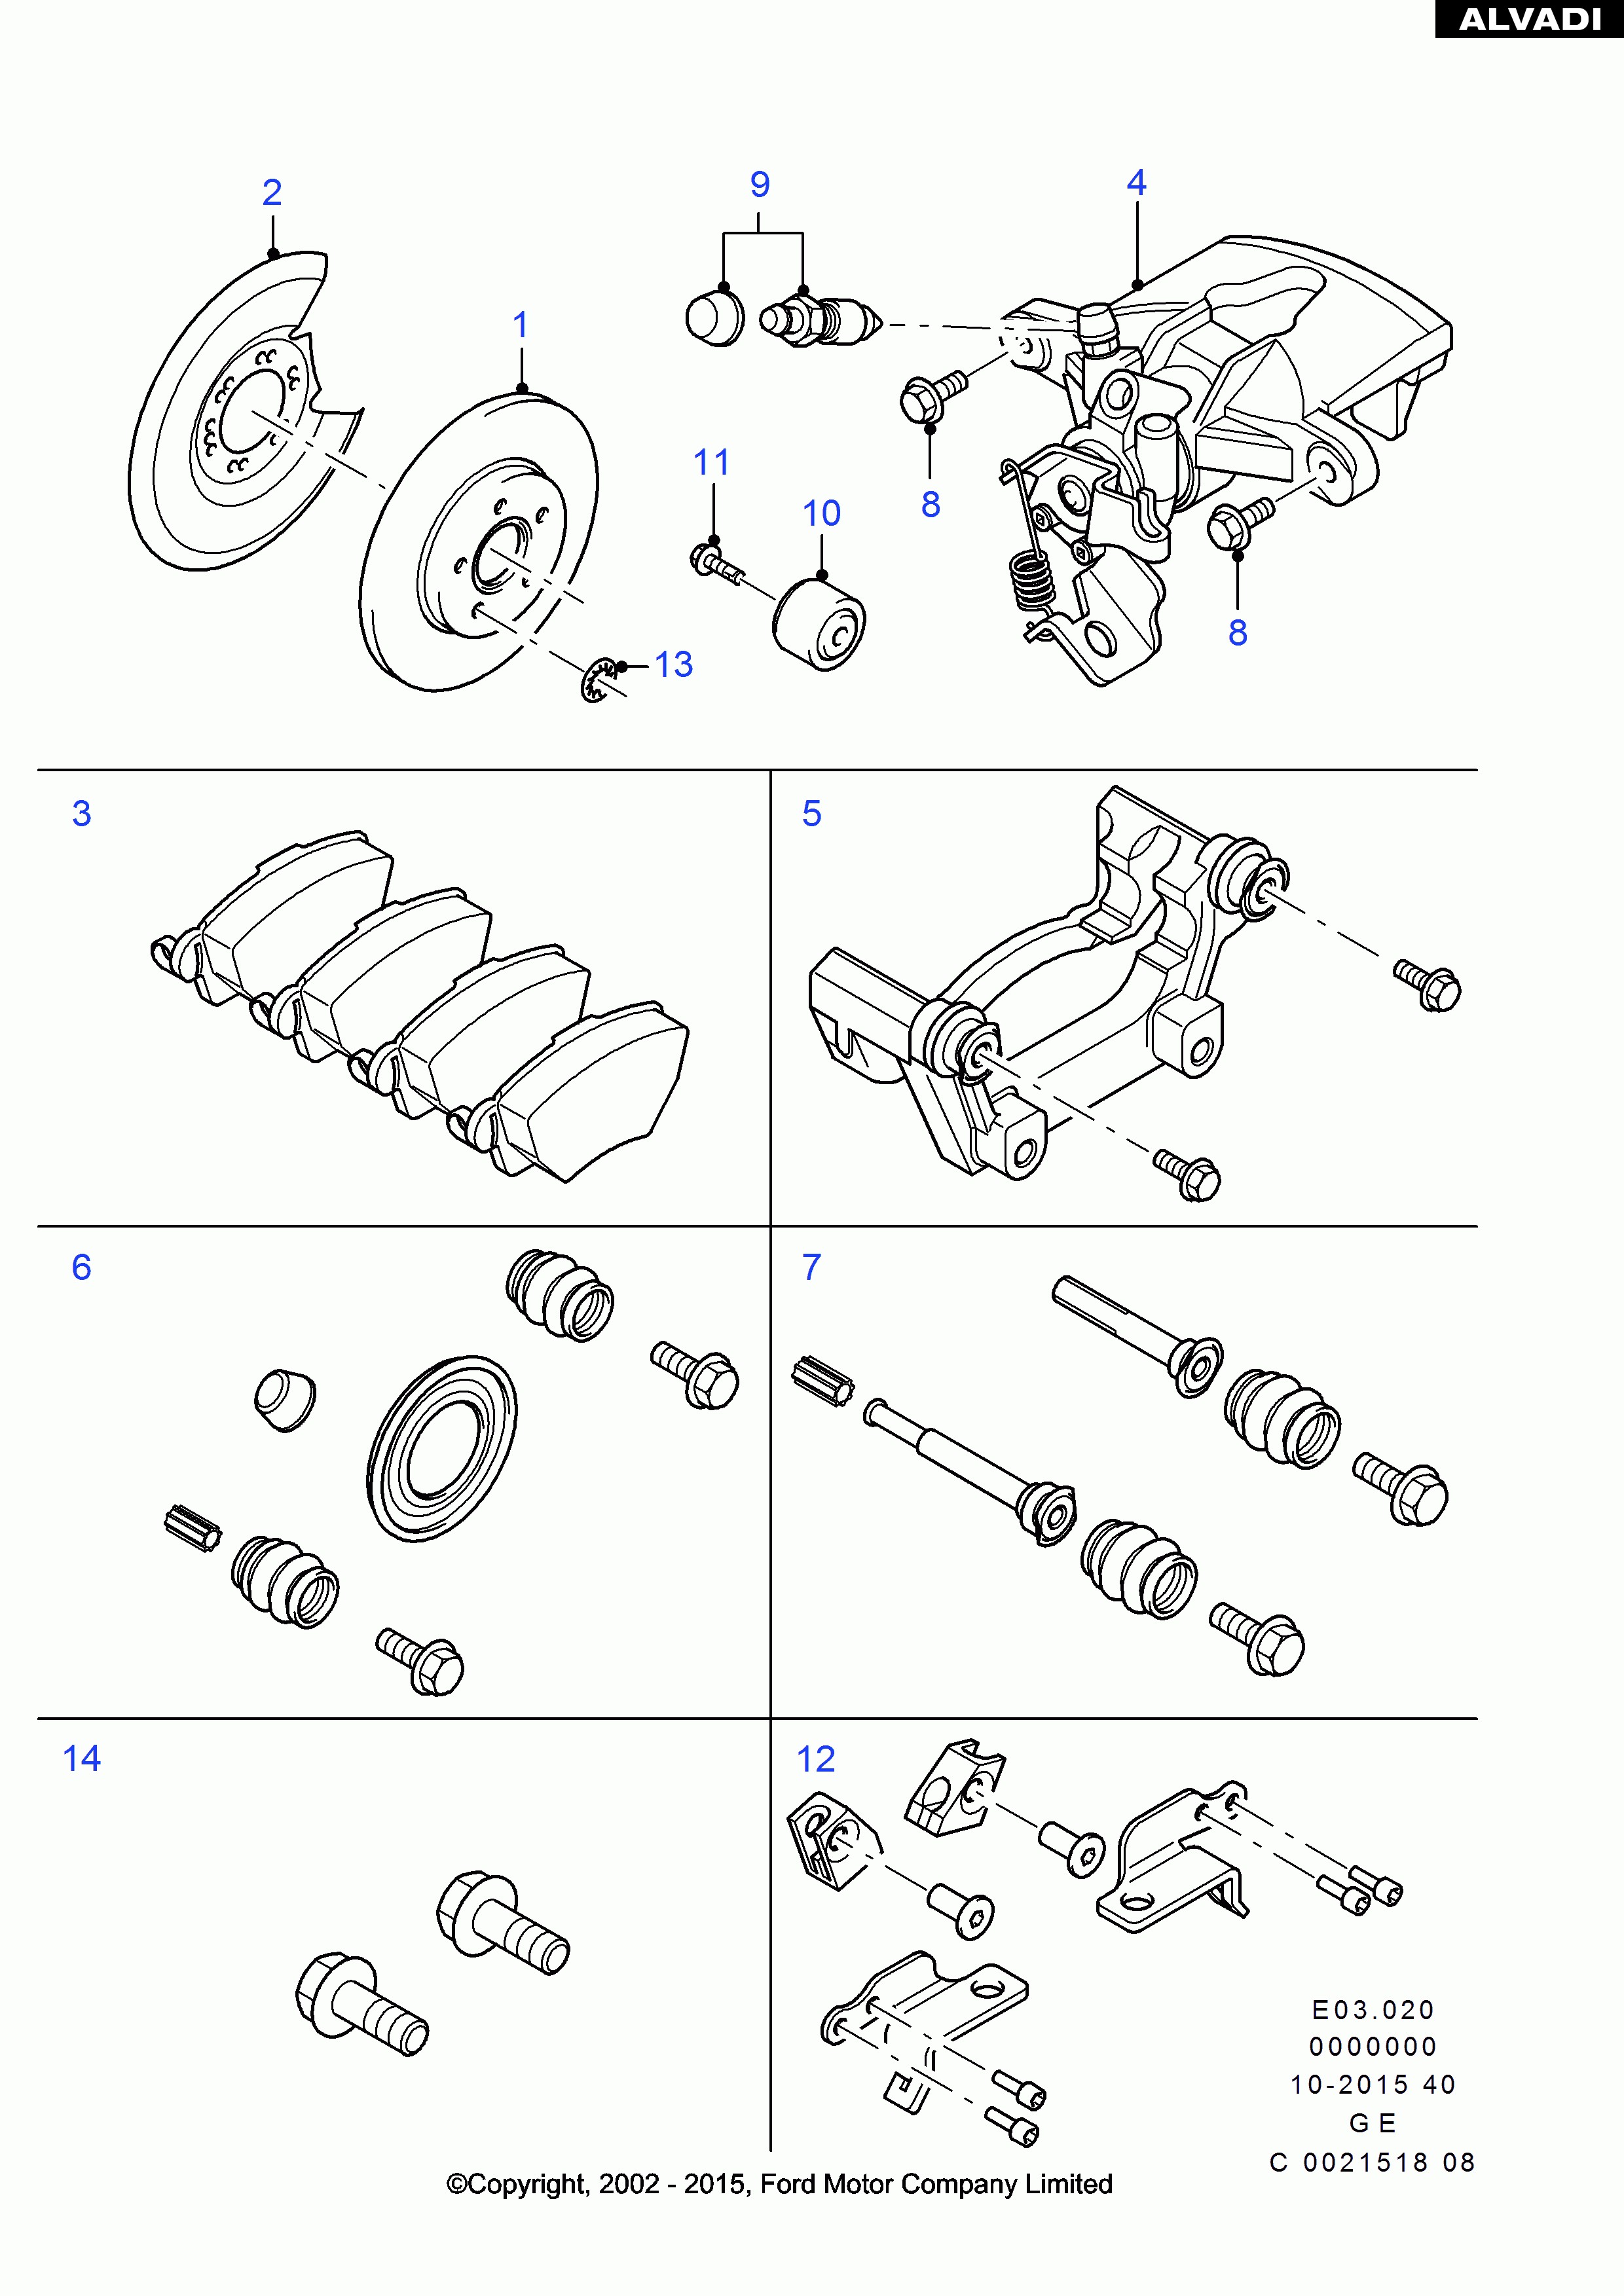 Car Brake assembly Diagram ford Rear Brake Discs and Calipers Of Car Brake assembly Diagram